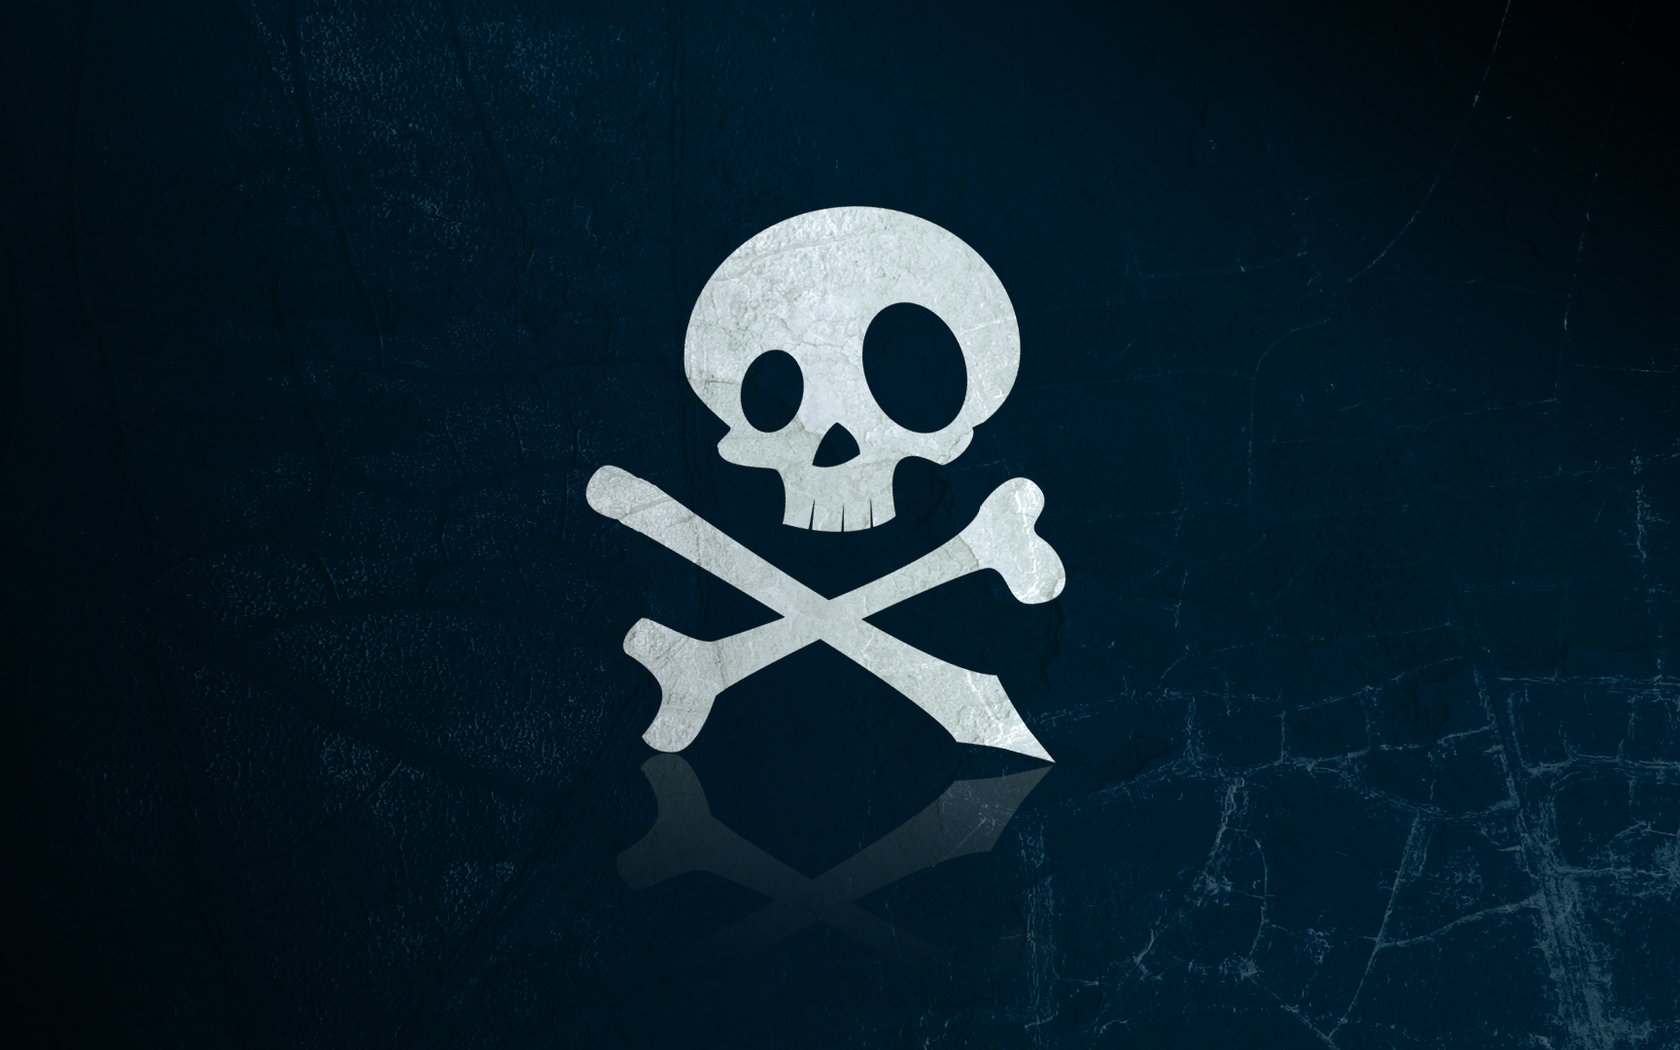 The Bones And Skull Jolly Roger Wallpaper Image